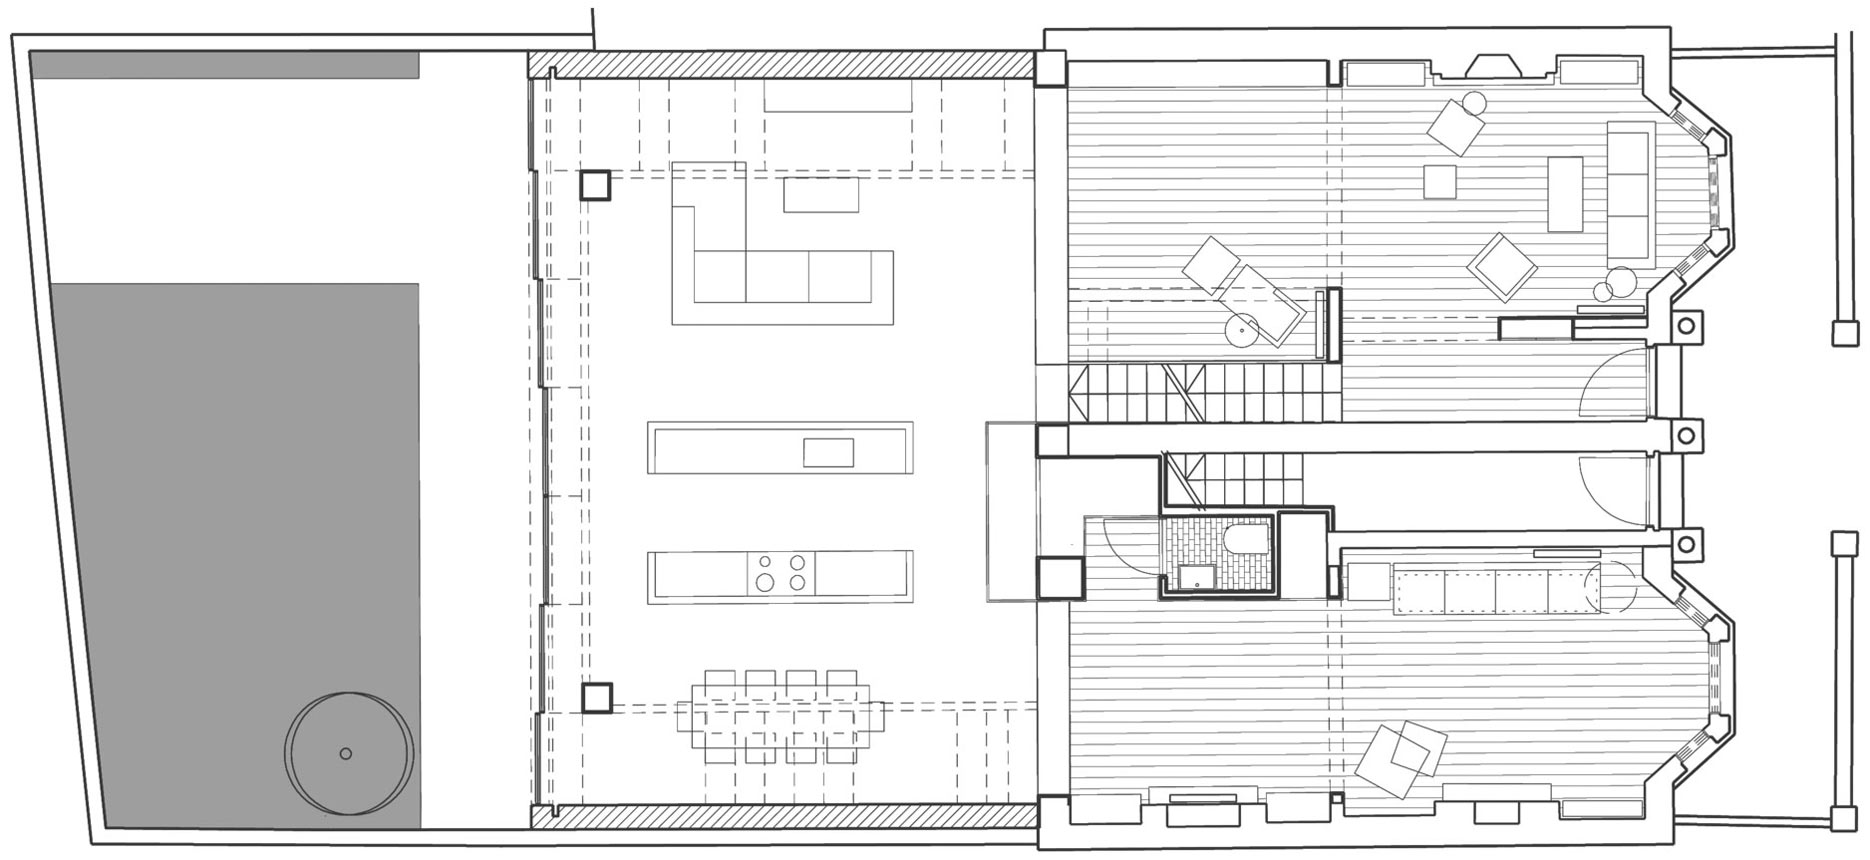 Ground Floor Plan, Modern Home in London by Bureau de Change Design Office